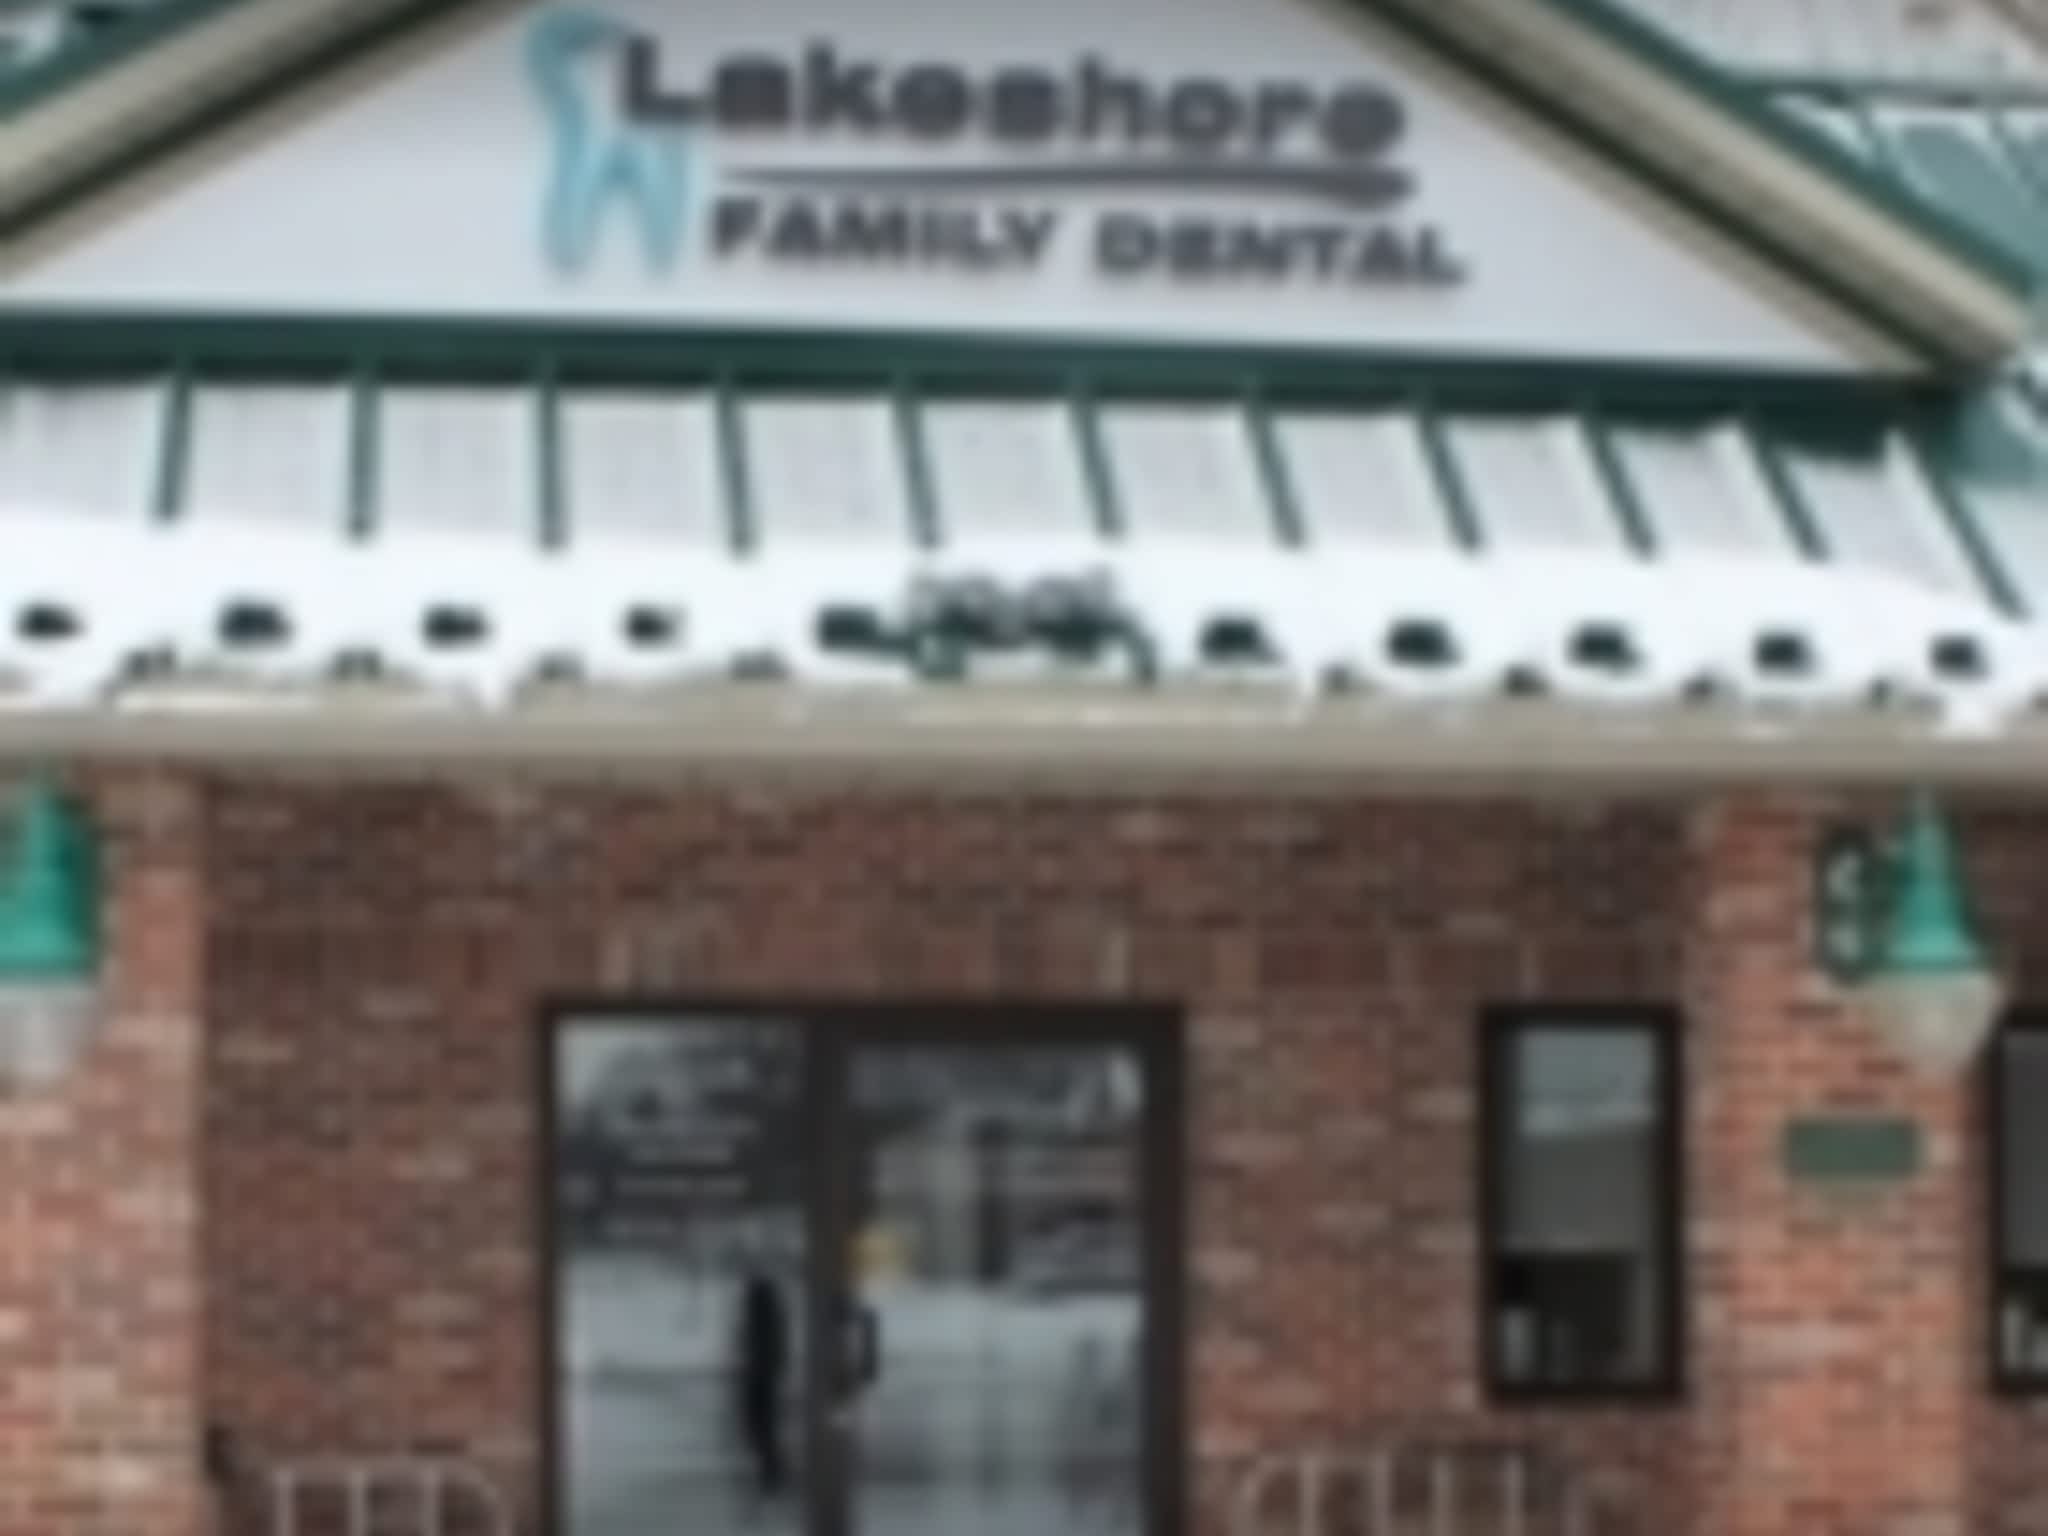 photo Lakeshore Family Dental